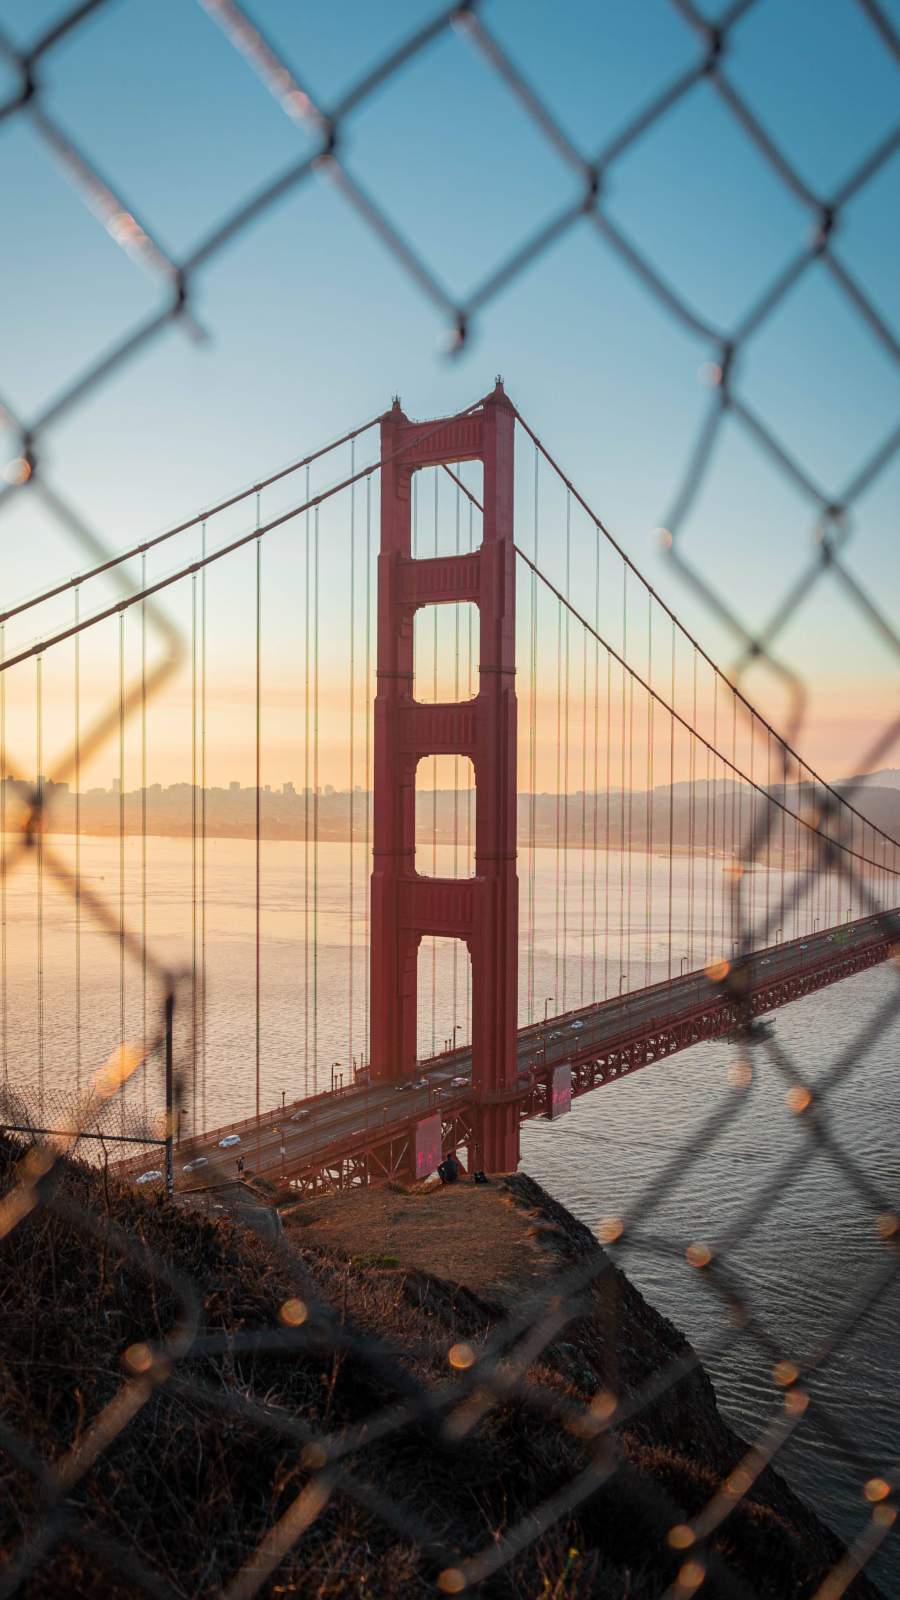 Golden Gate Bridge IPhone Wallpaper - IPhone Wallpapers : iPhone Wallpapers